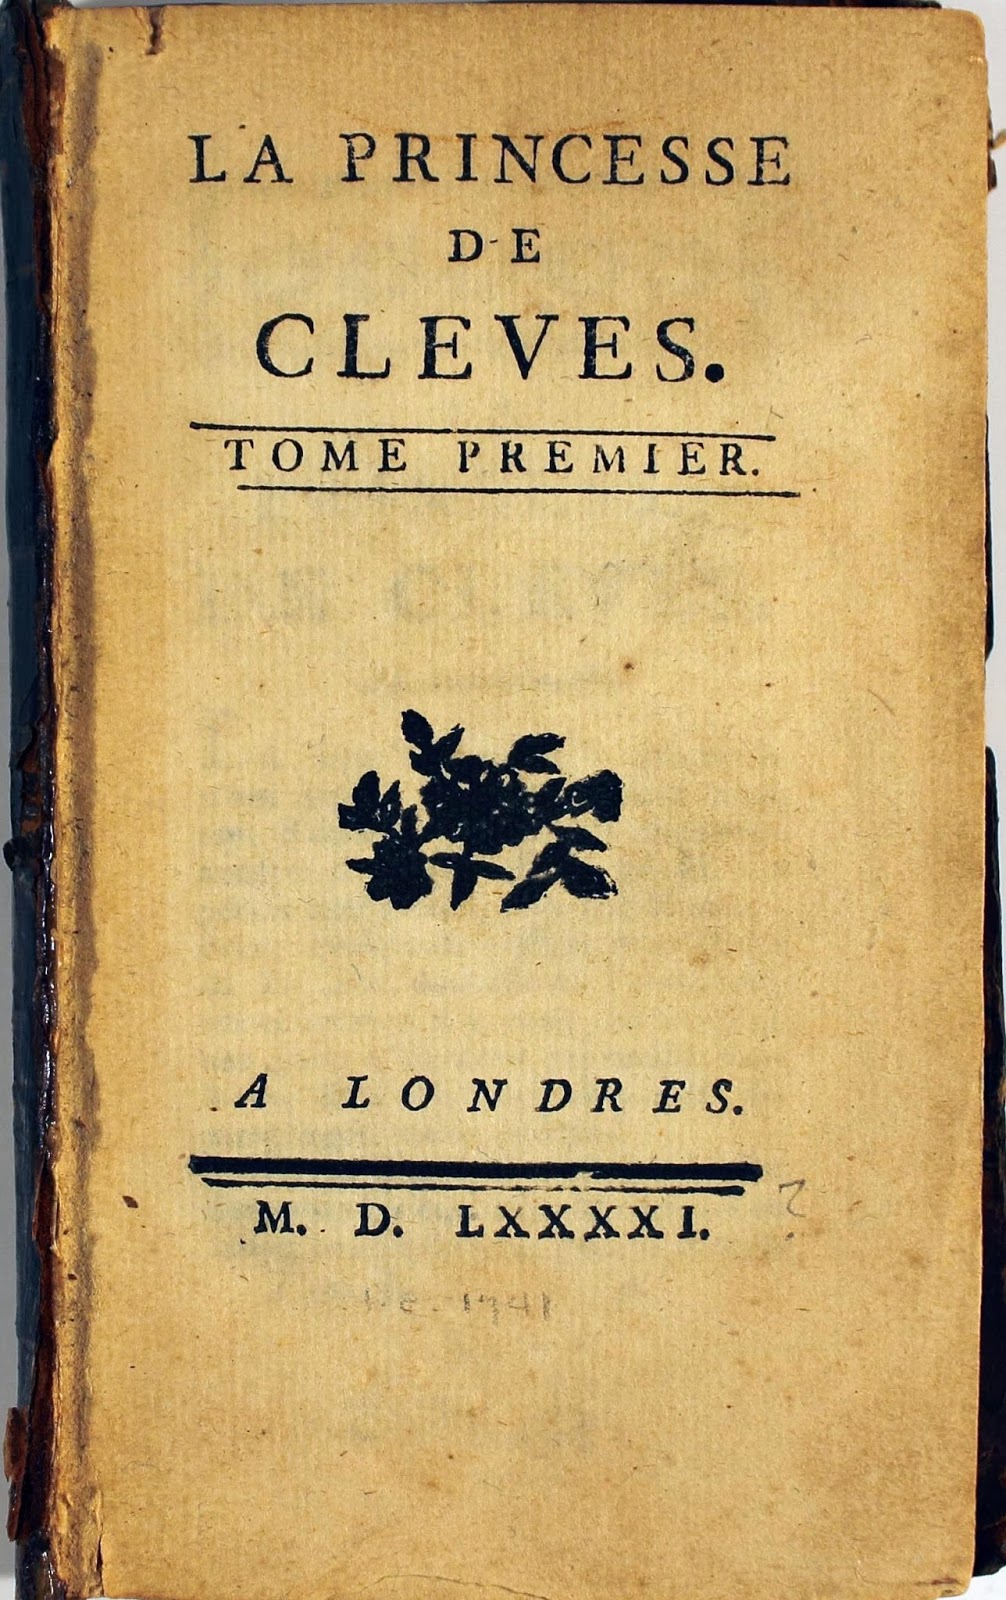 La Princesse de Cleves -- book cover